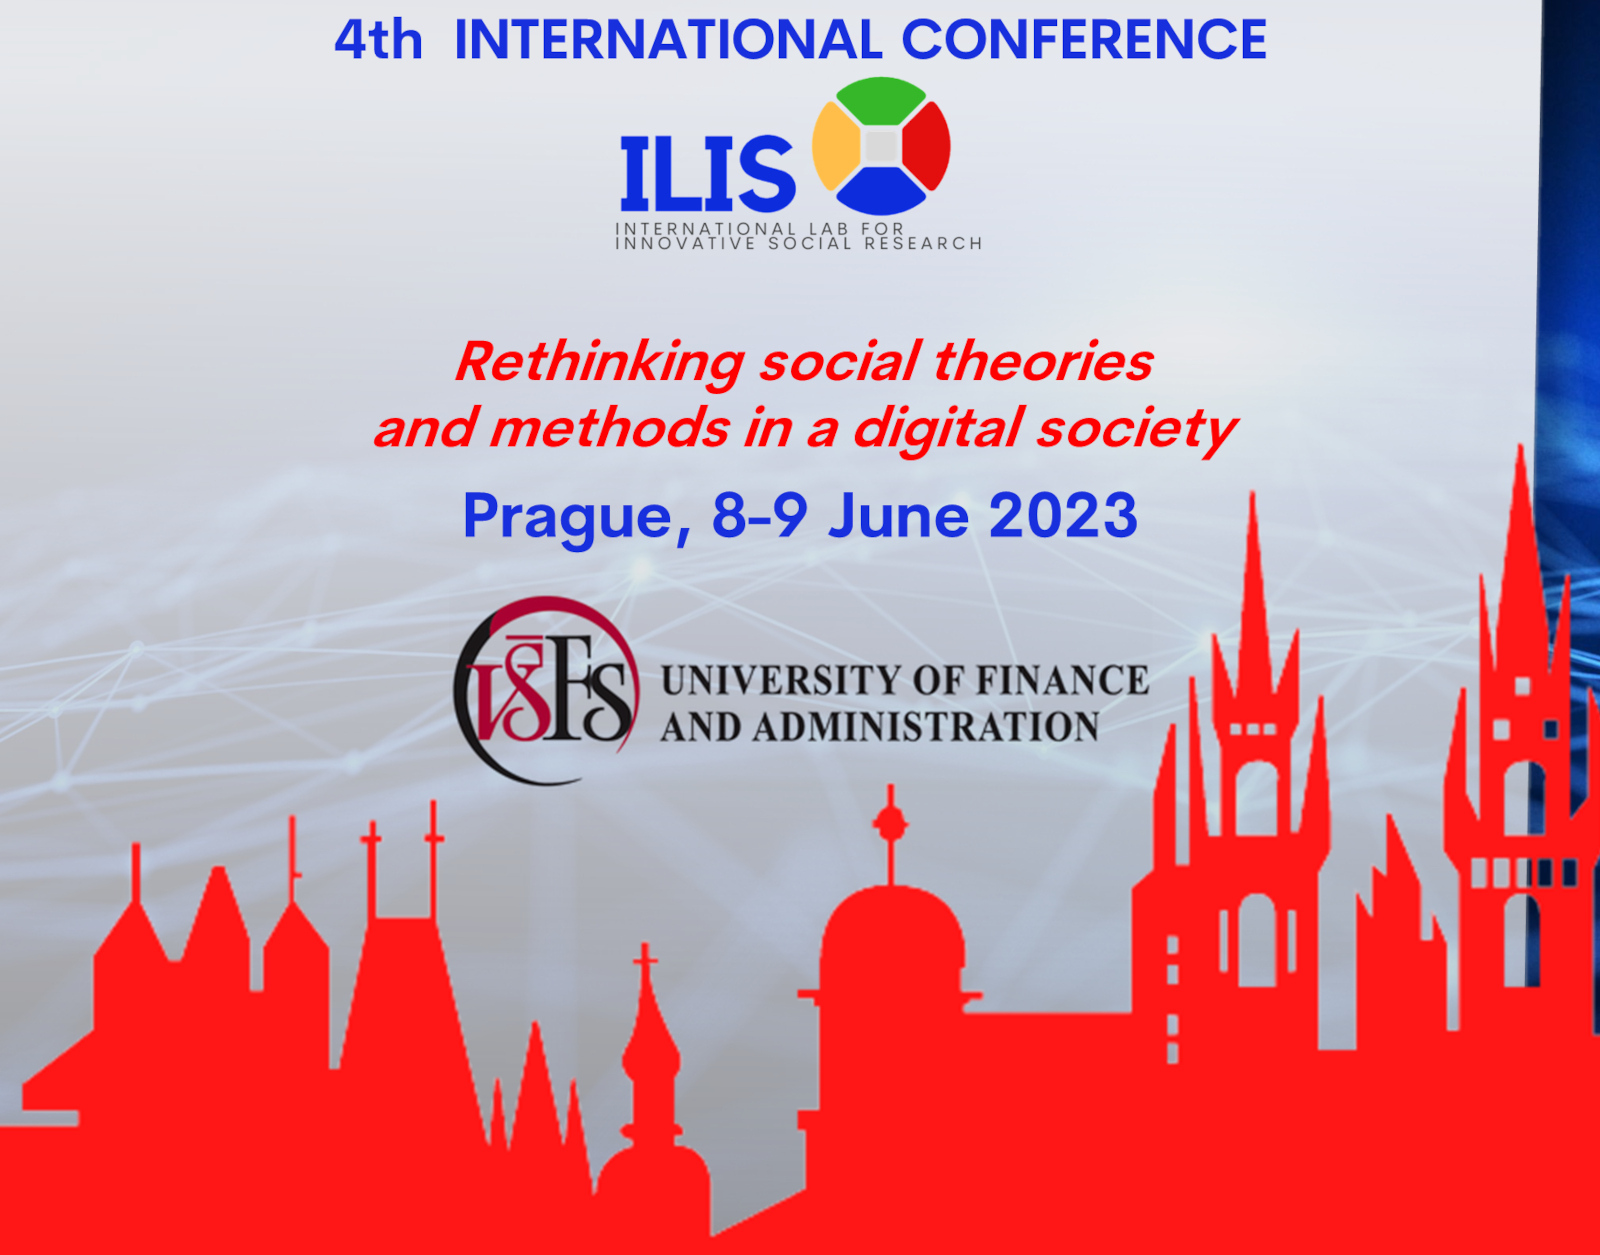 4th International Conference ILIS